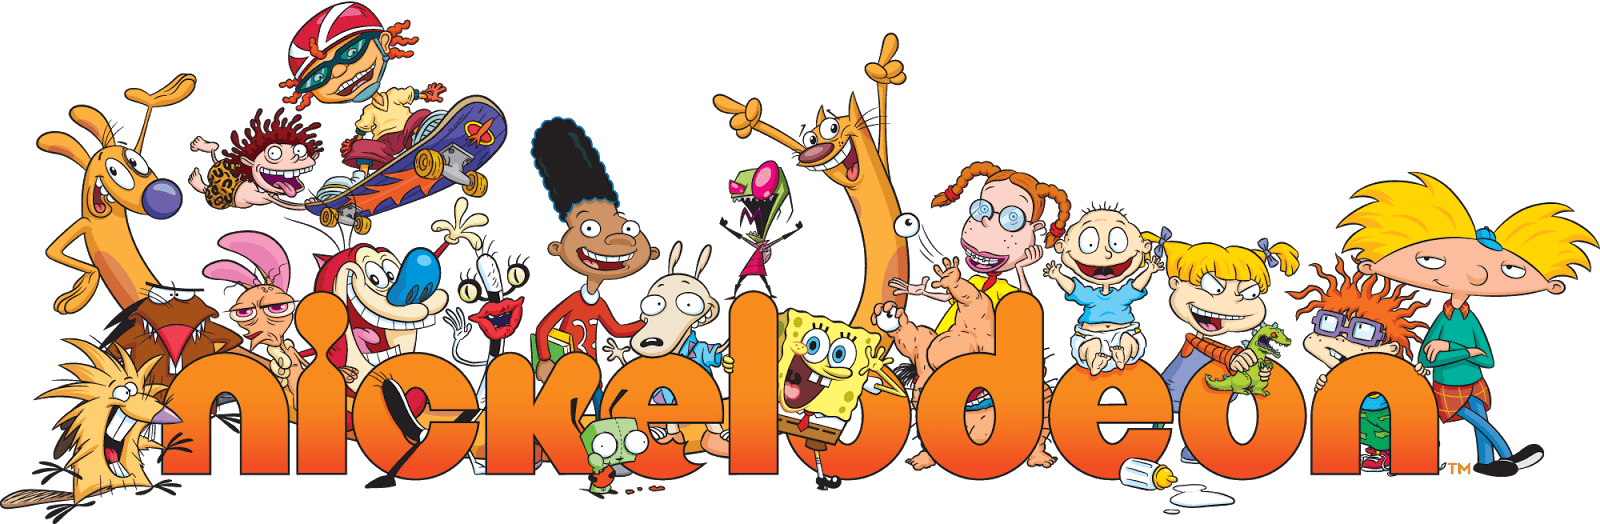 2018 Nickelodeon Logo - Nickelodeon-Logo-With-90s-Nicktoons-Stars-Characters-NickSplat-The ...